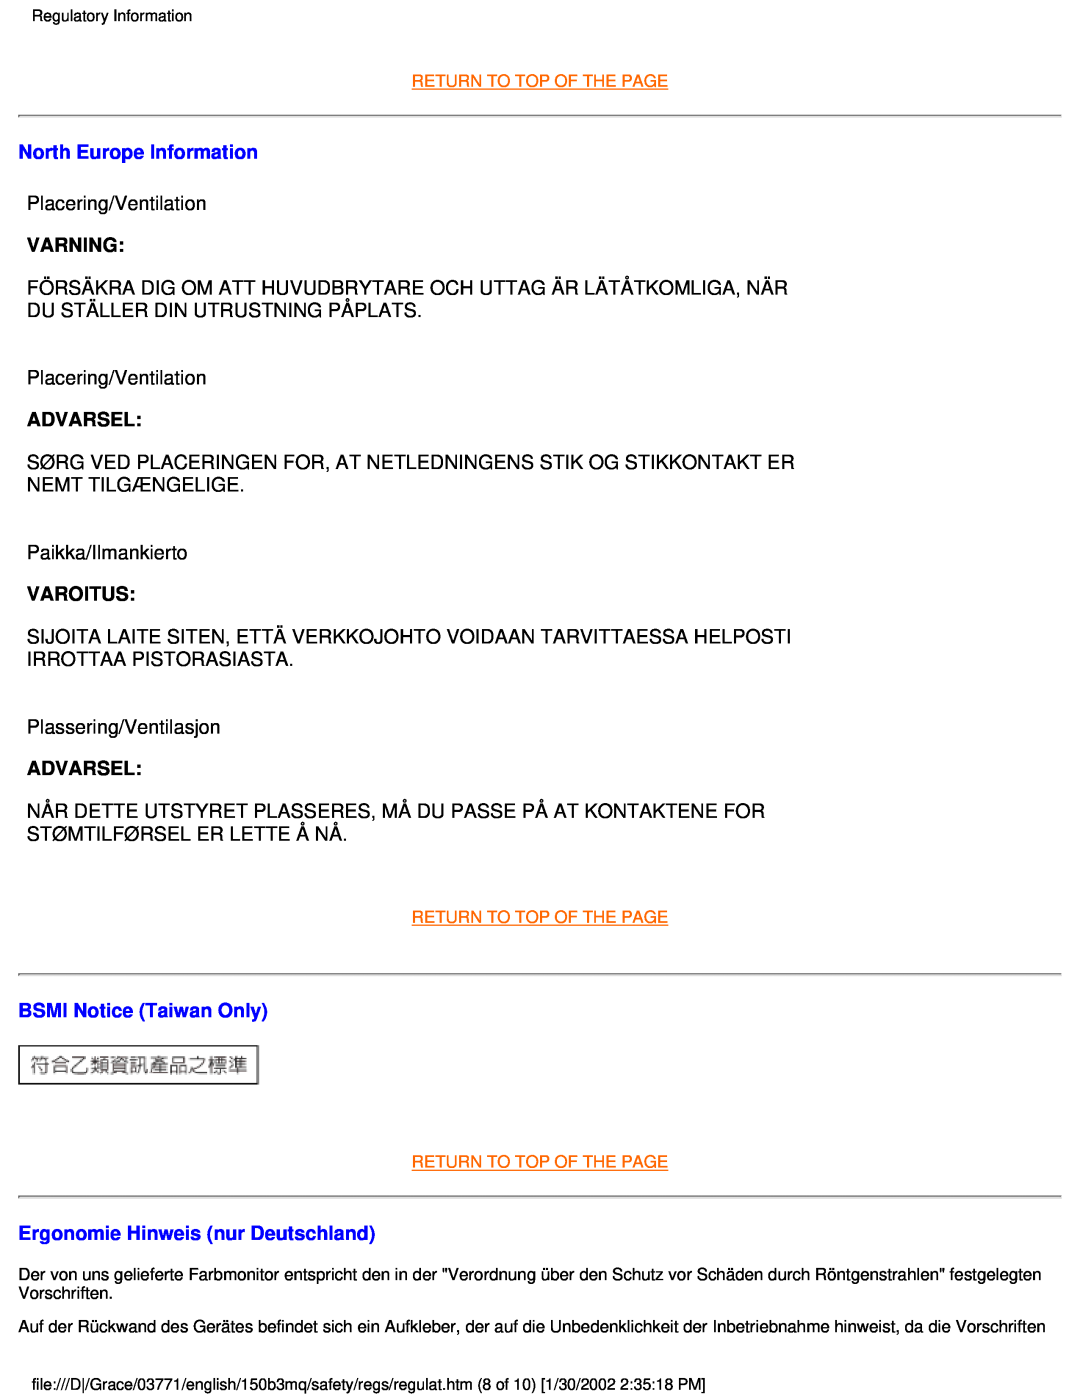 Philips 150B3M/150B3Q user manual North Europe Information, Varning, Advarsel, Varoitus, BSMI Notice Taiwan Only 